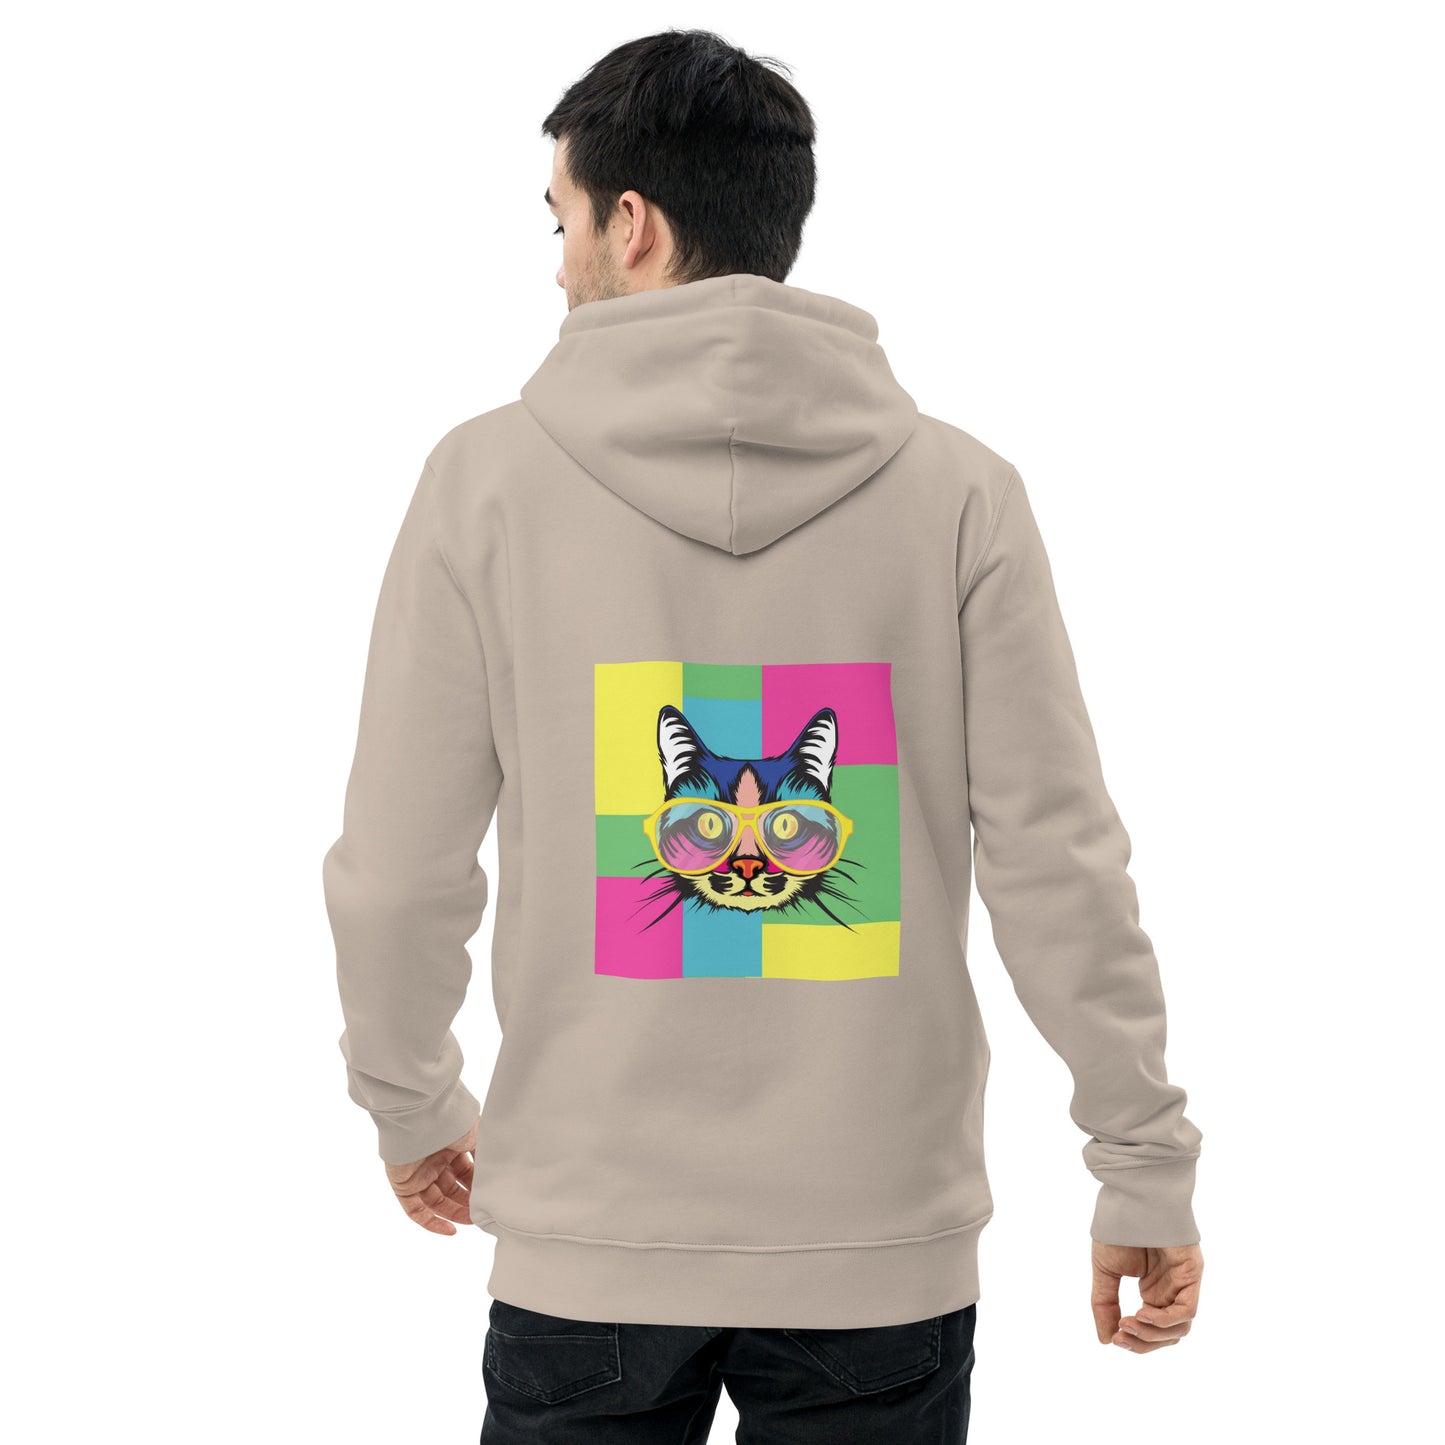 Unisex essential eco hoodie with Pop art design, by Vecteezy.com